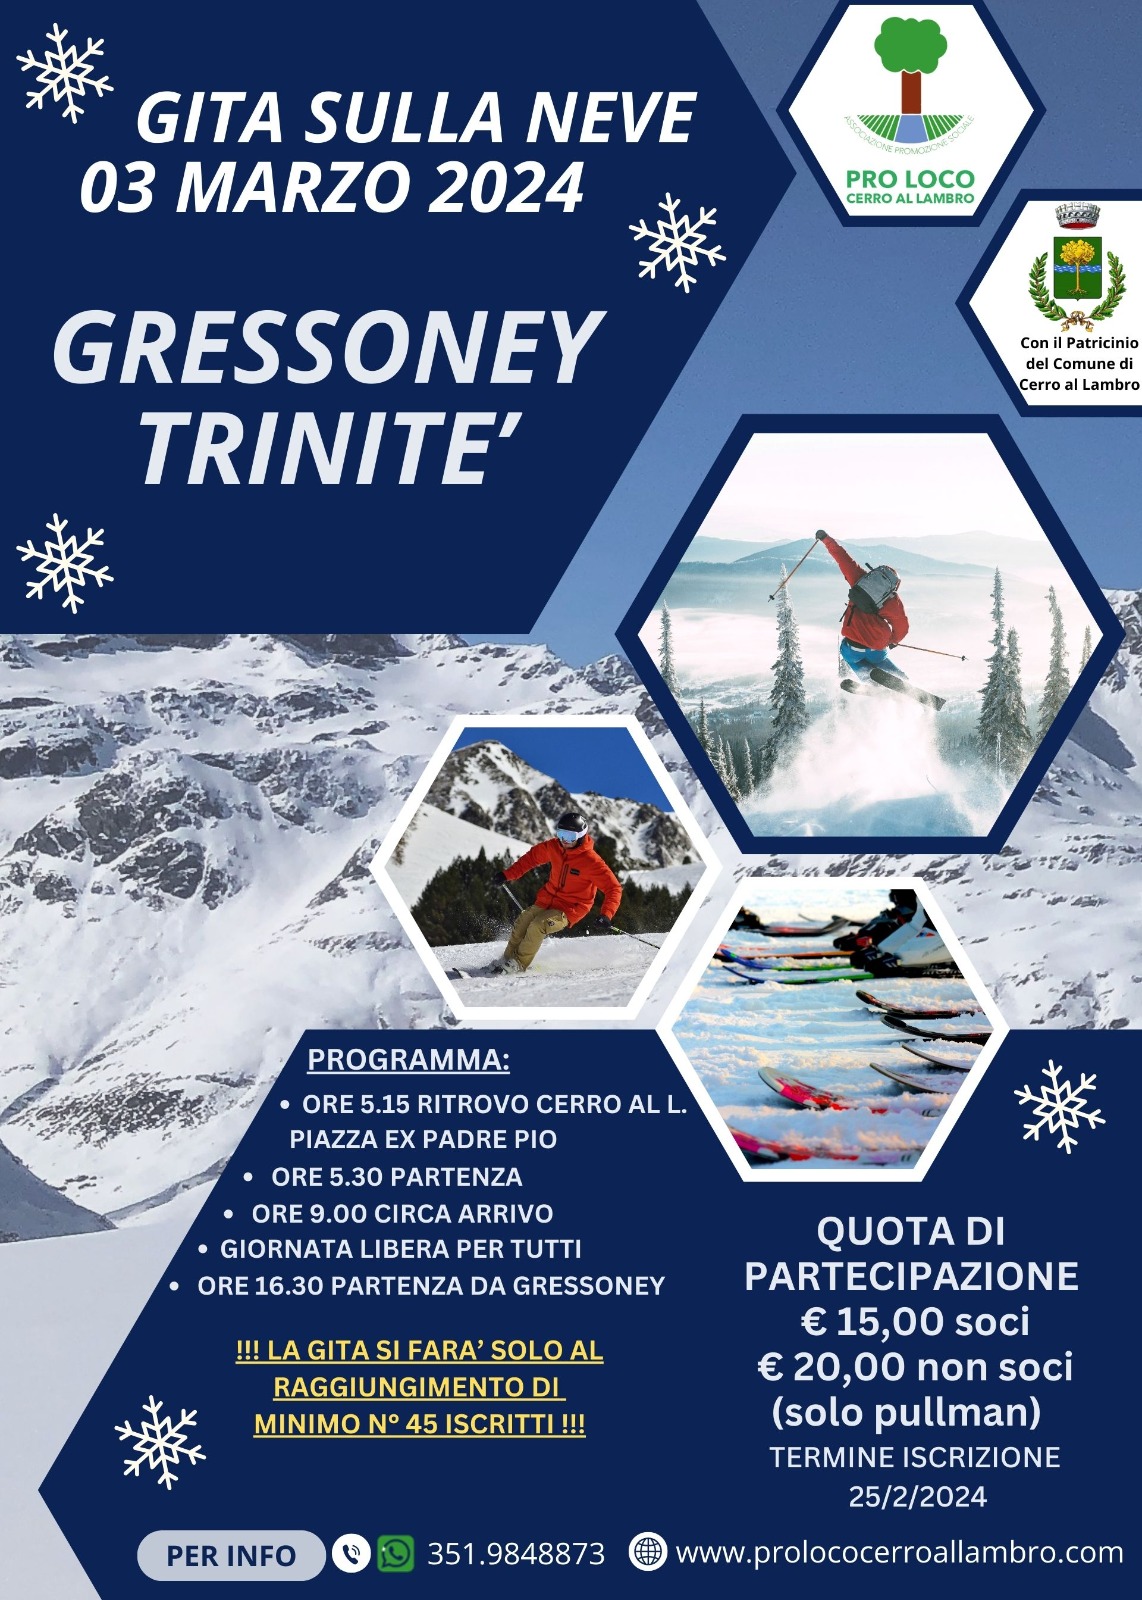 Gita sulla Neve a Gressoney Trinite'